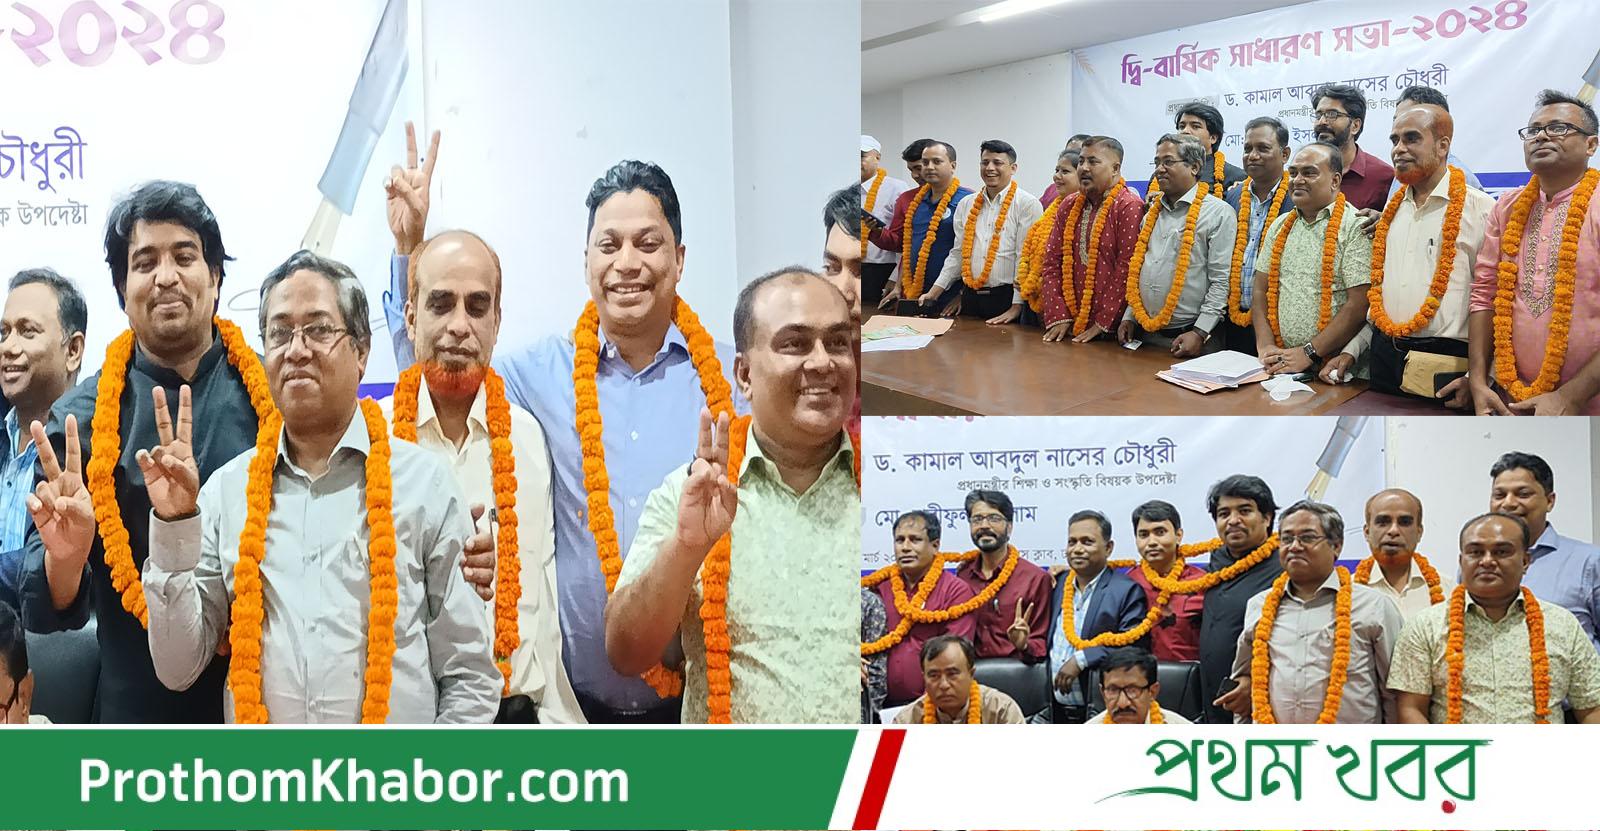 CumillaJournalist-Forum-CJFD-BangladeshNews-BanglaNews-ProthomKhabor-ProthomKhobor-PrathamKhabar.jpg